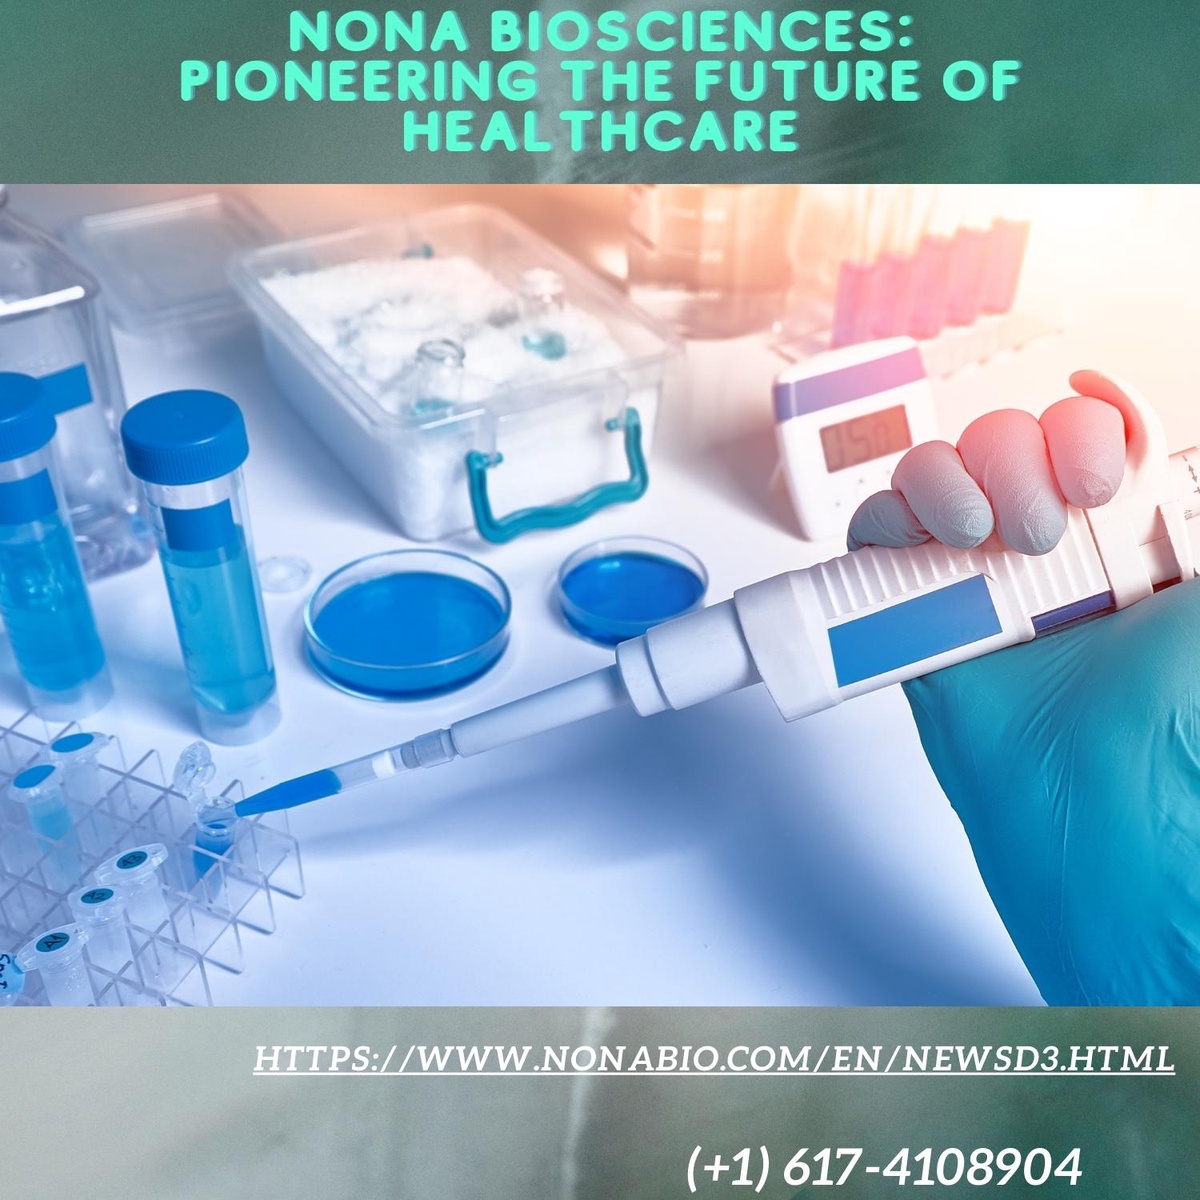 Nona Biosciences: Pioneering the Future of Precision Medicine with Cutting-Edge Biotechnologies